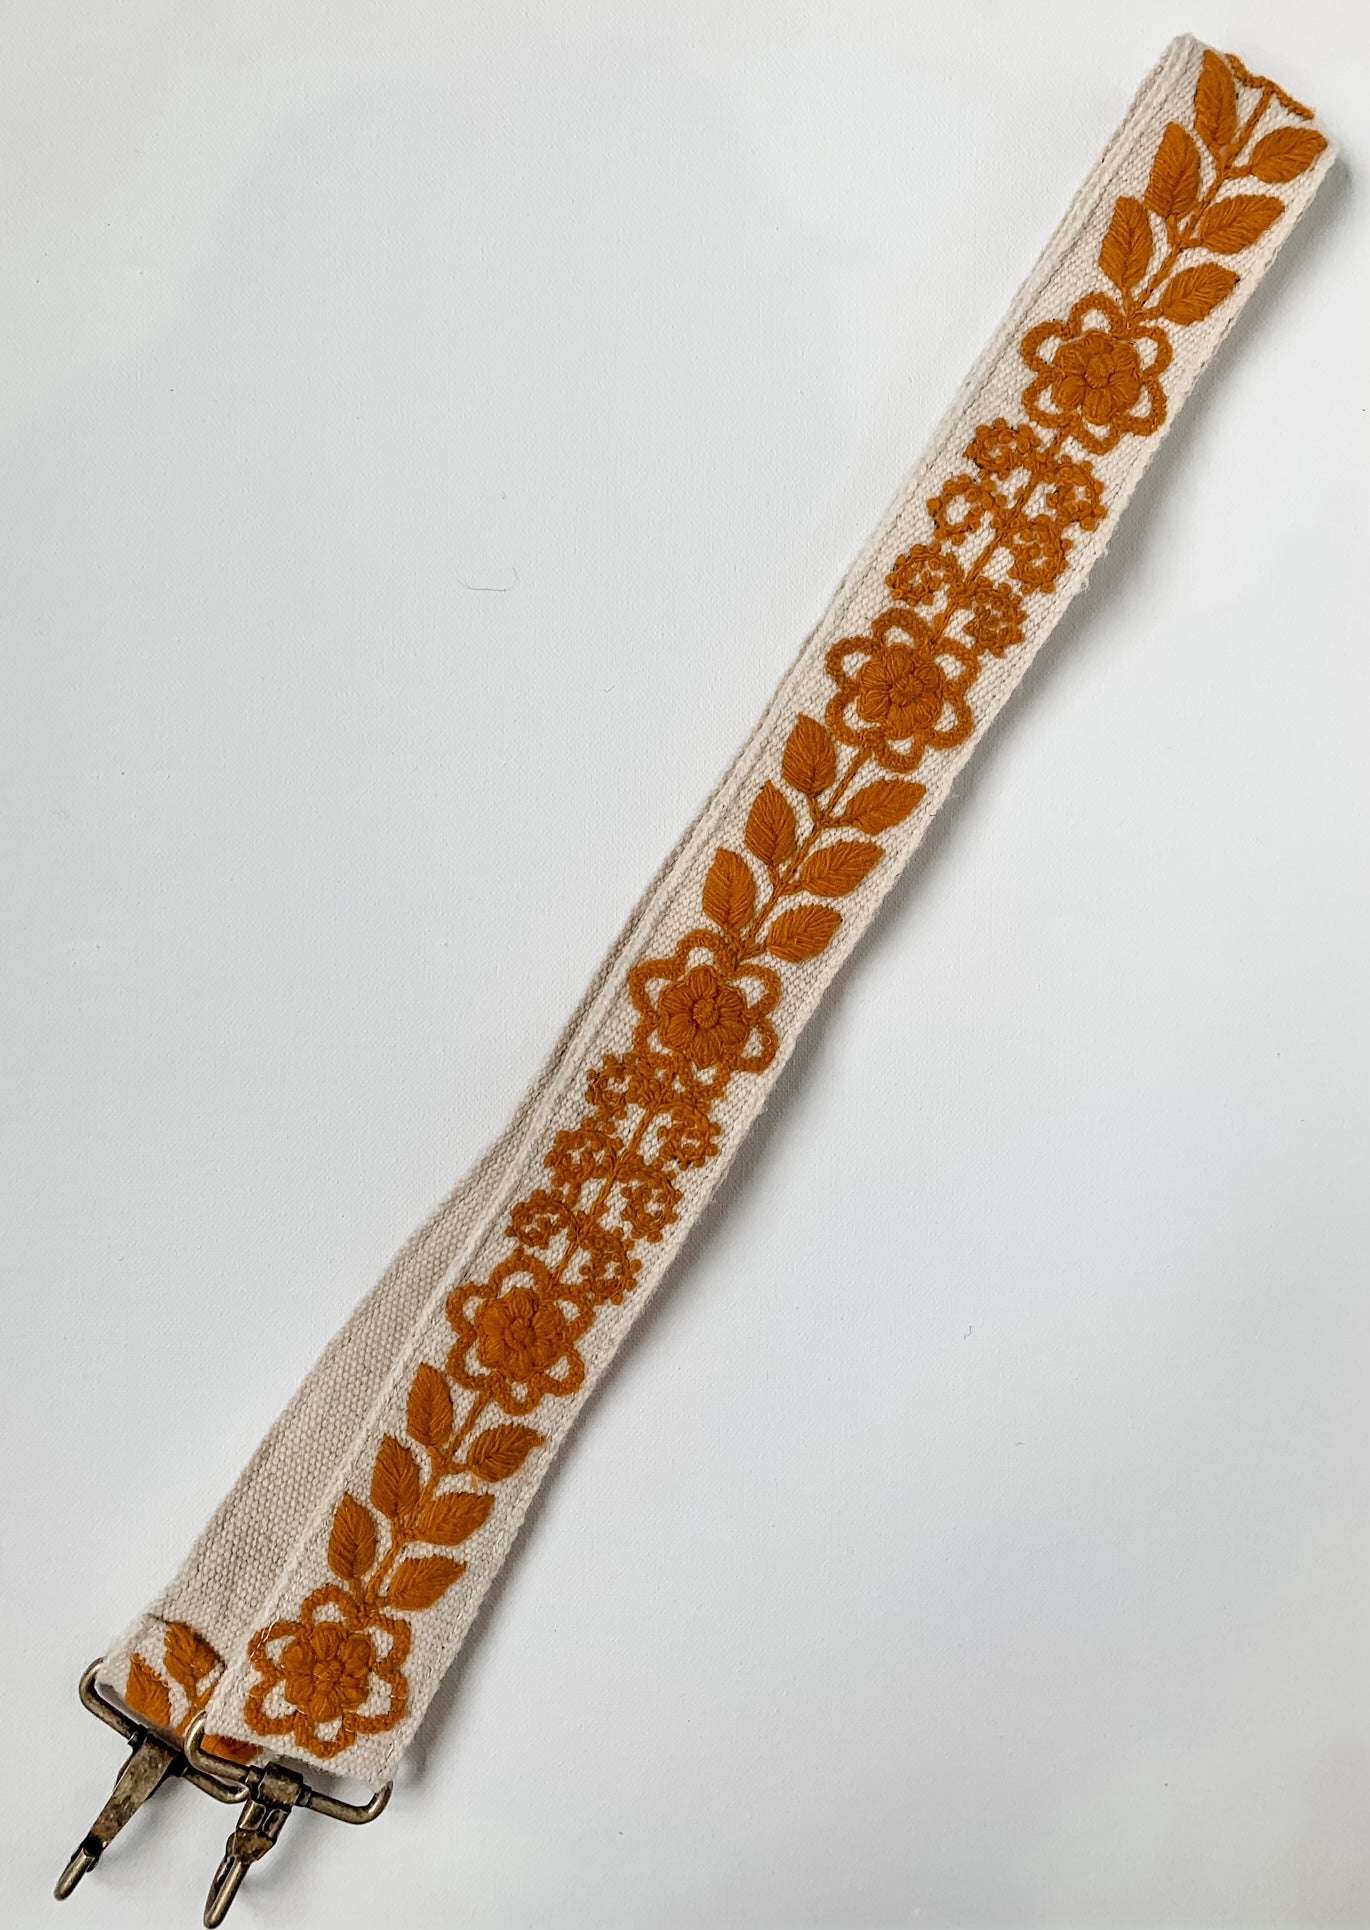 Rachel Large Purse Strap  with a dark orange floral and leaf pattern.